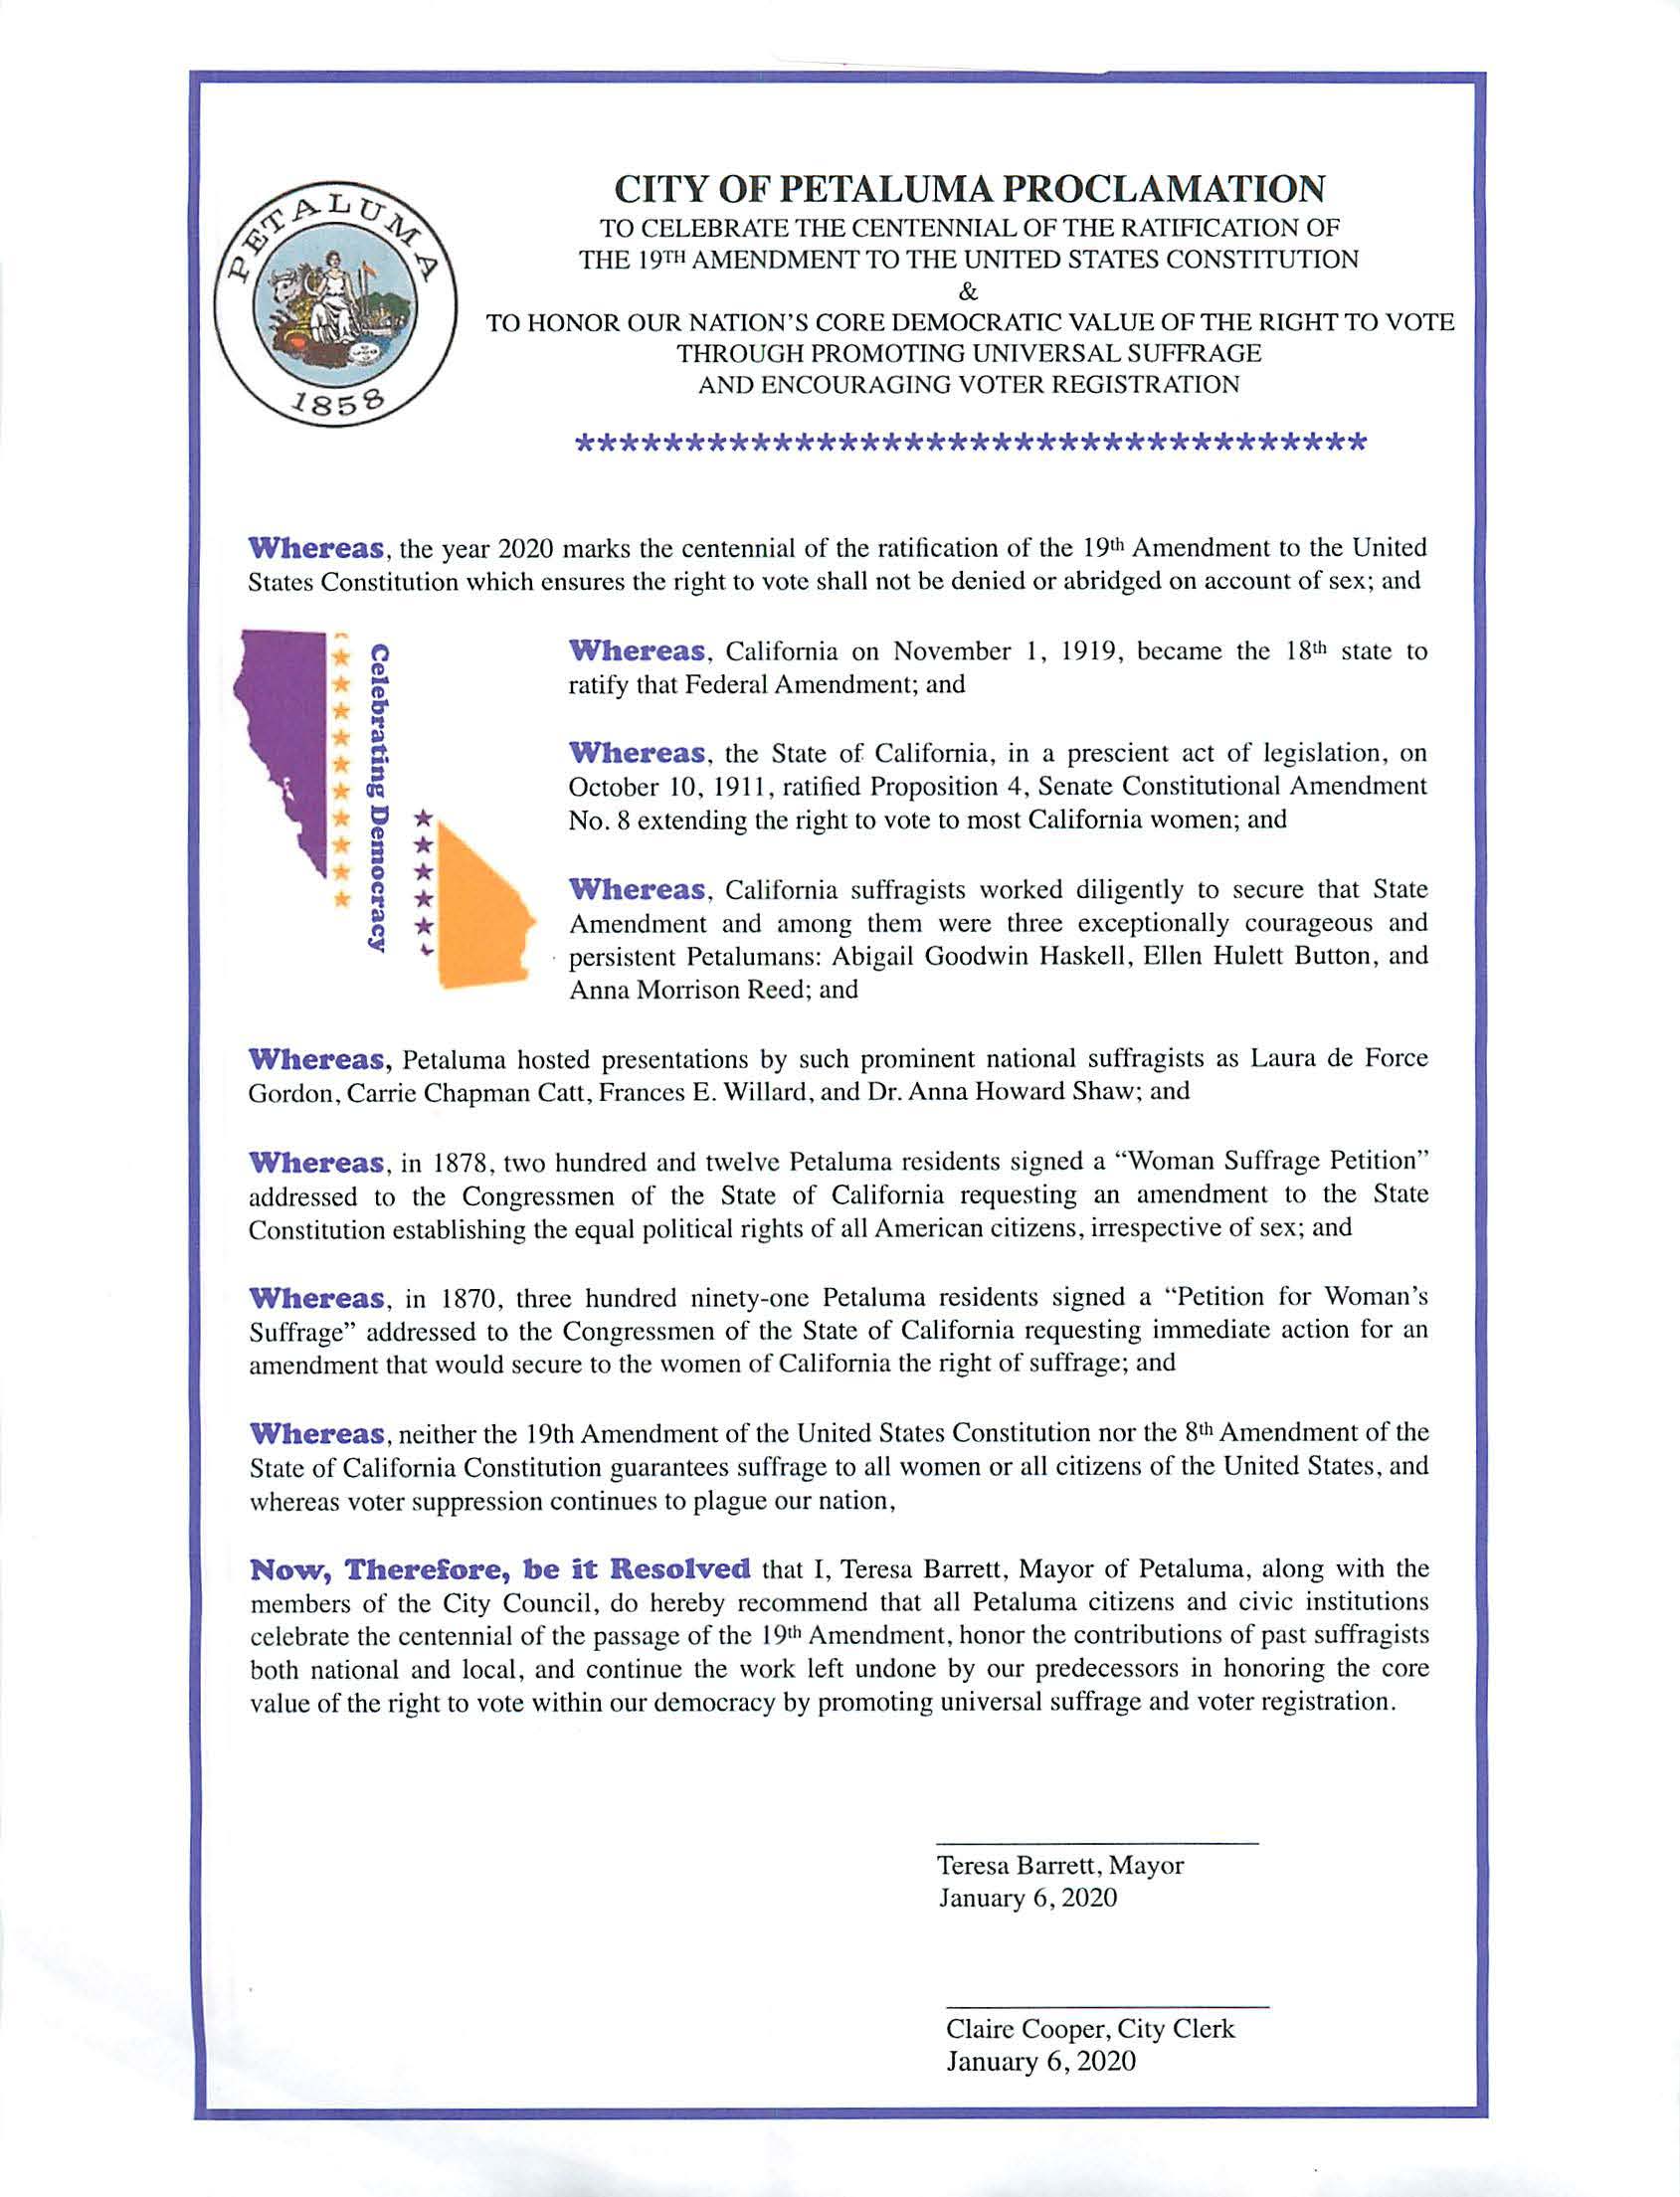 City of Petaluma Proclamation to celebrate the Centennial of the Ratificationn of the 19th Amendment